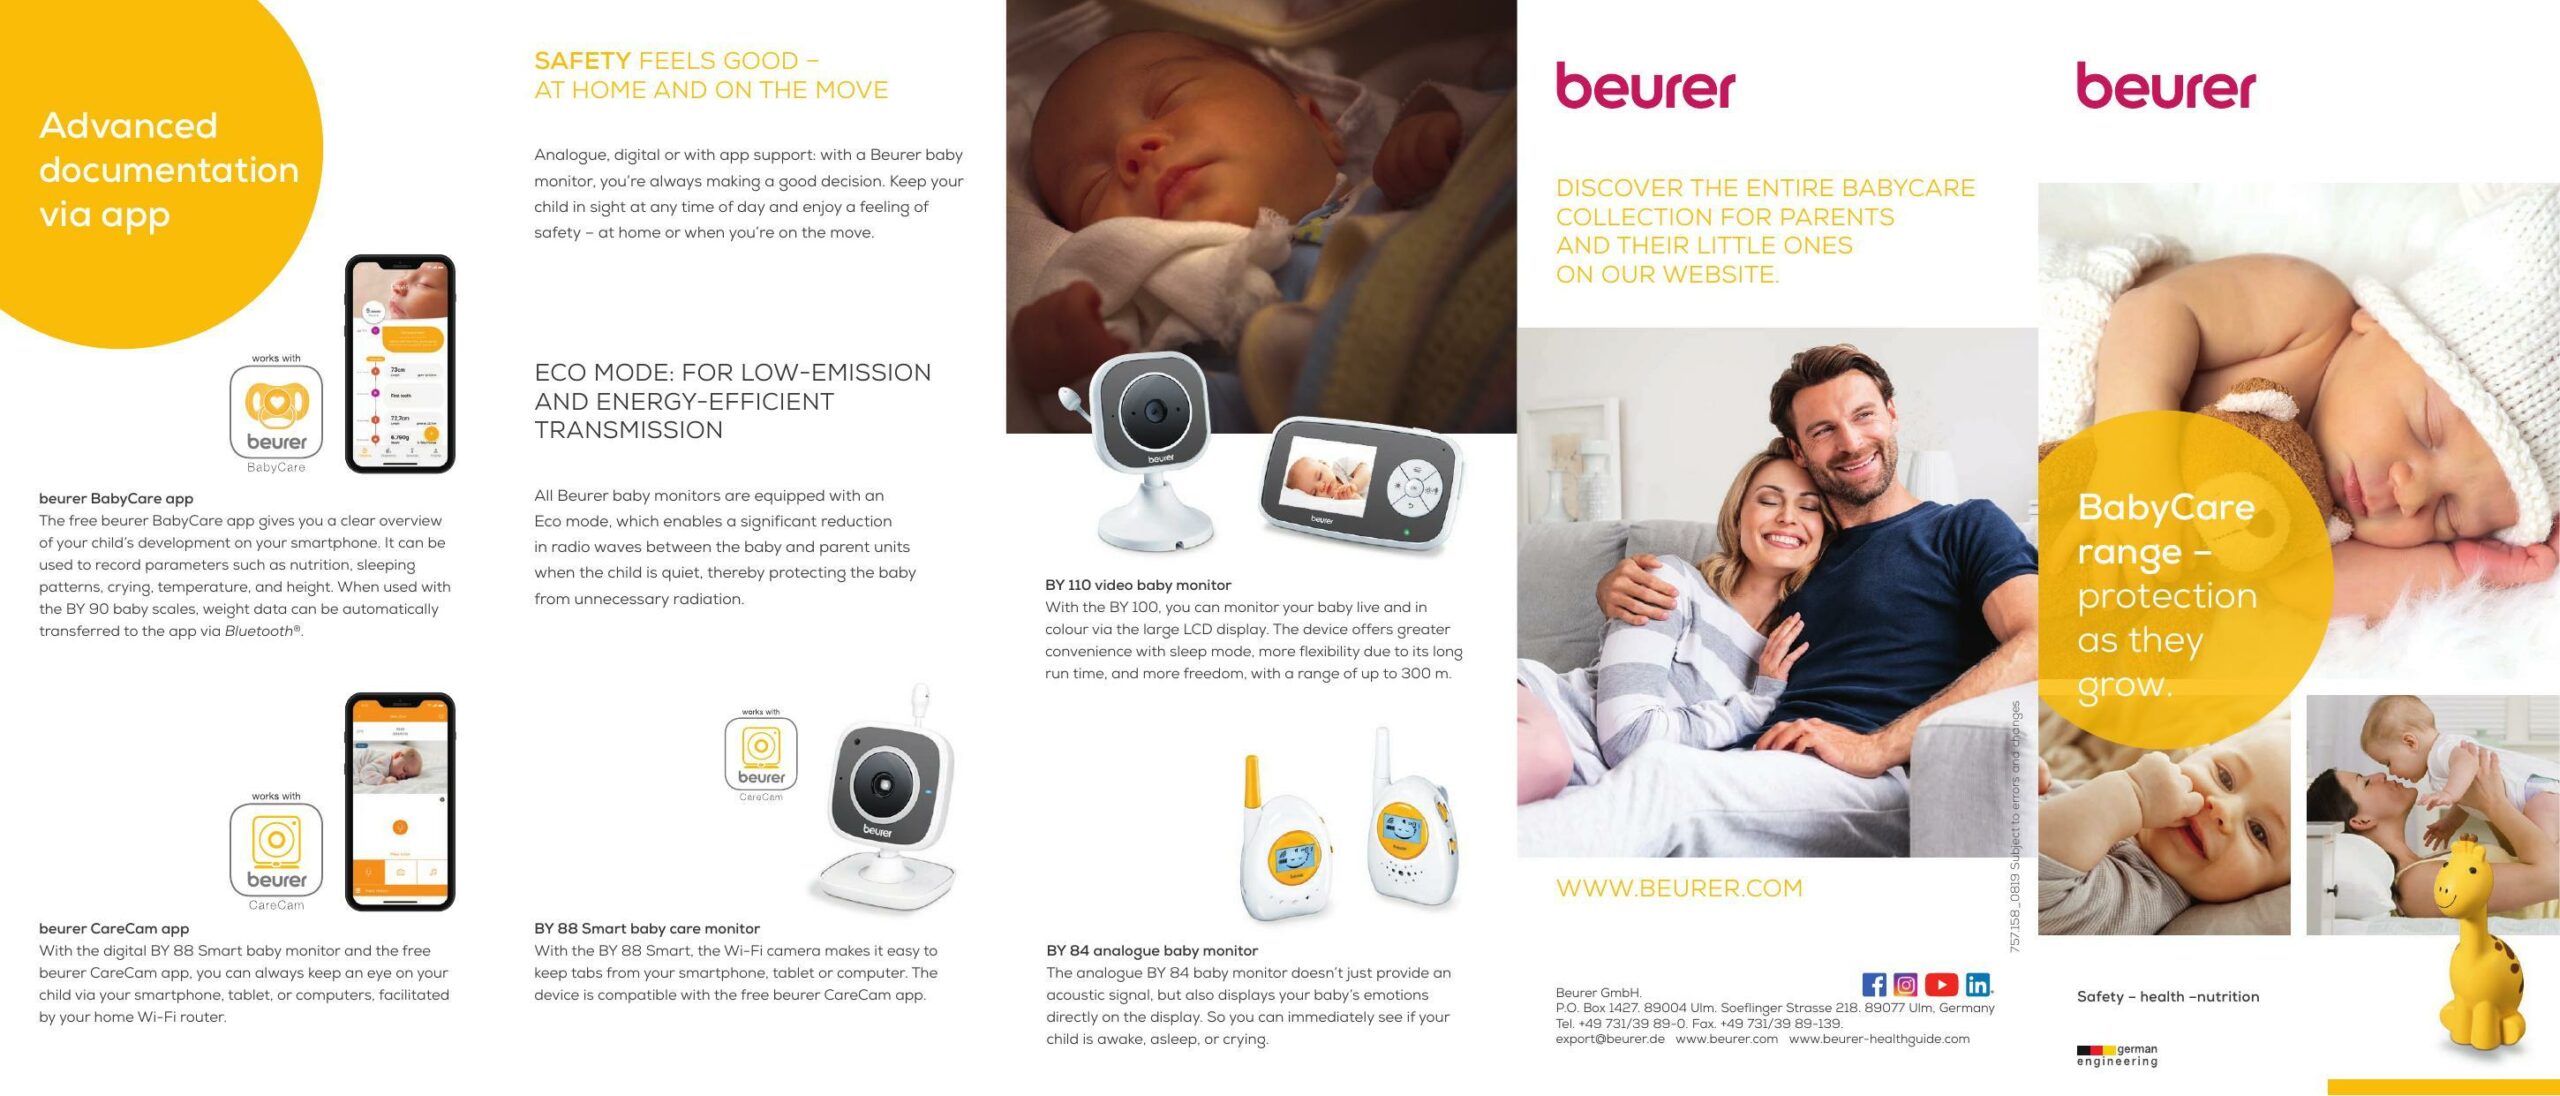 beurer-babycare-user-manual.pdf